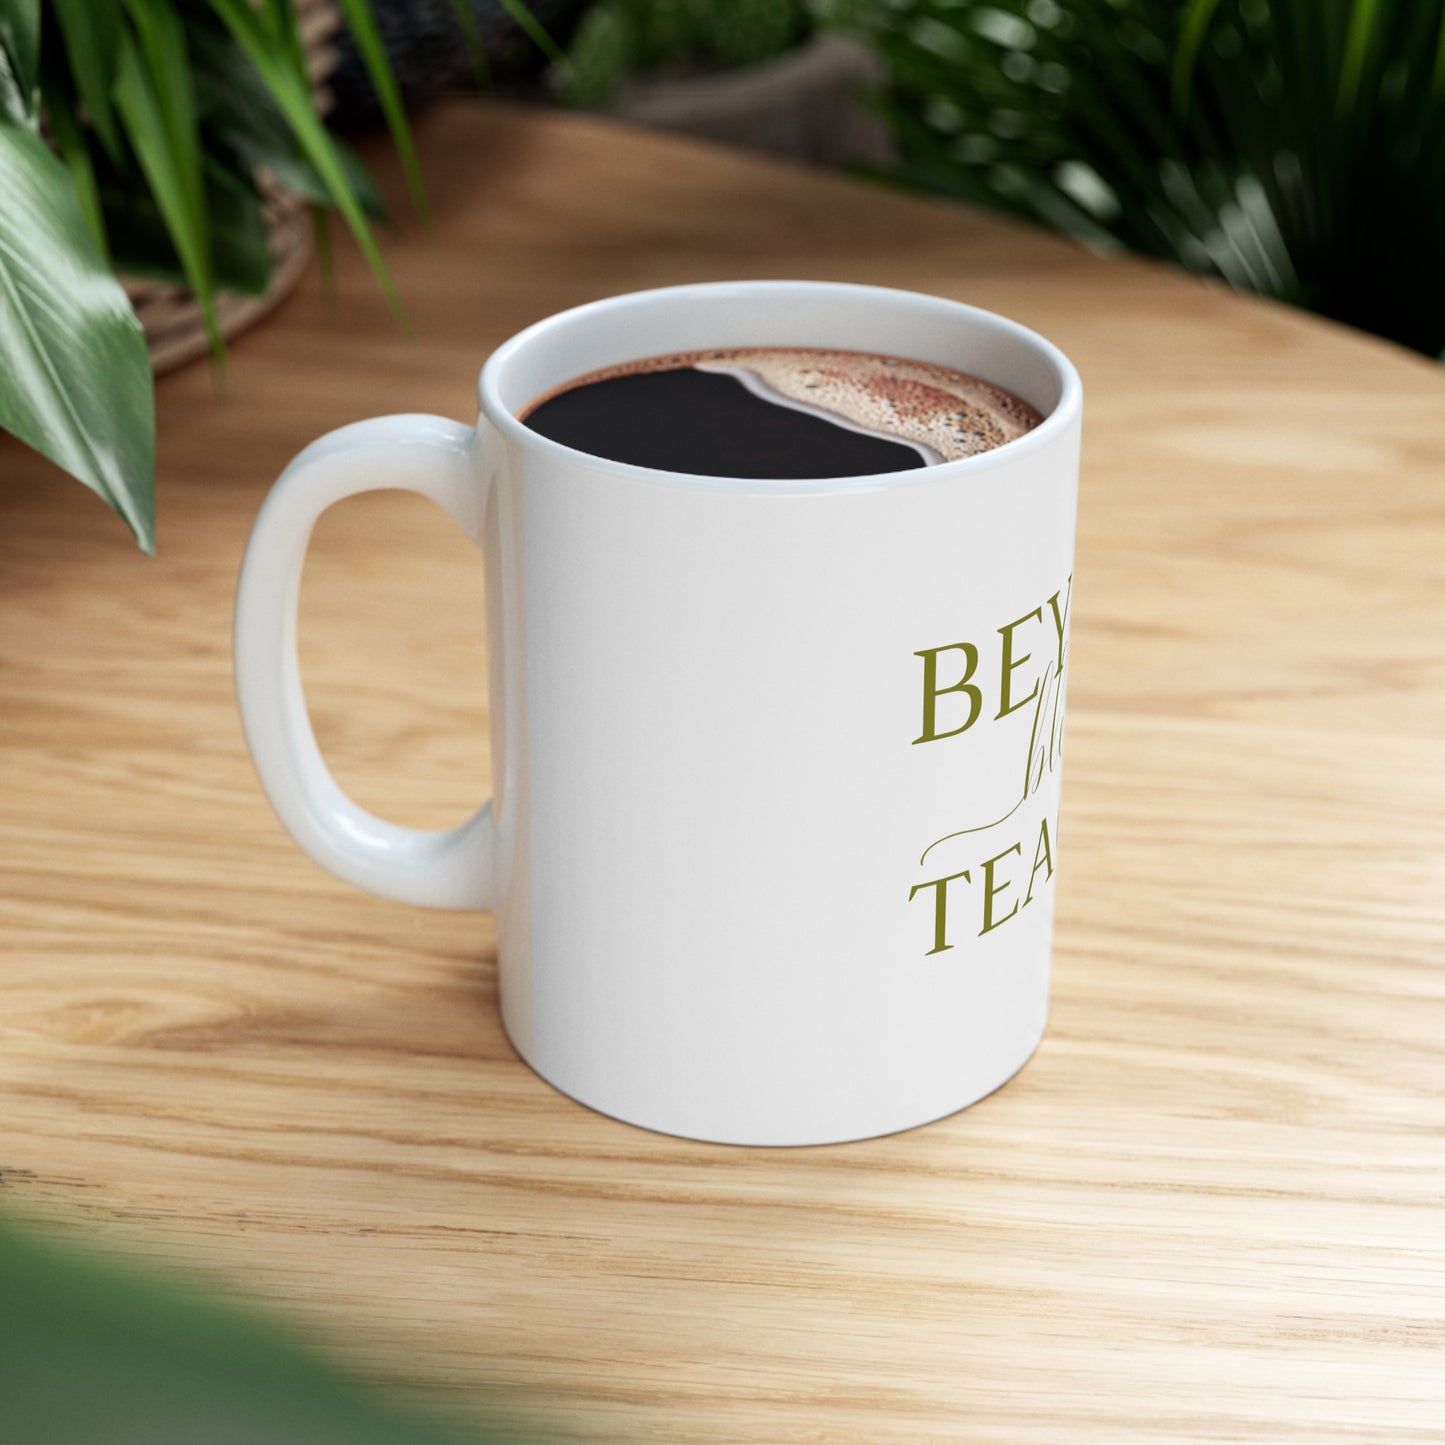 Beyond Blessed Teacher - Plain Ceramic Mug 11oz - Olive Green